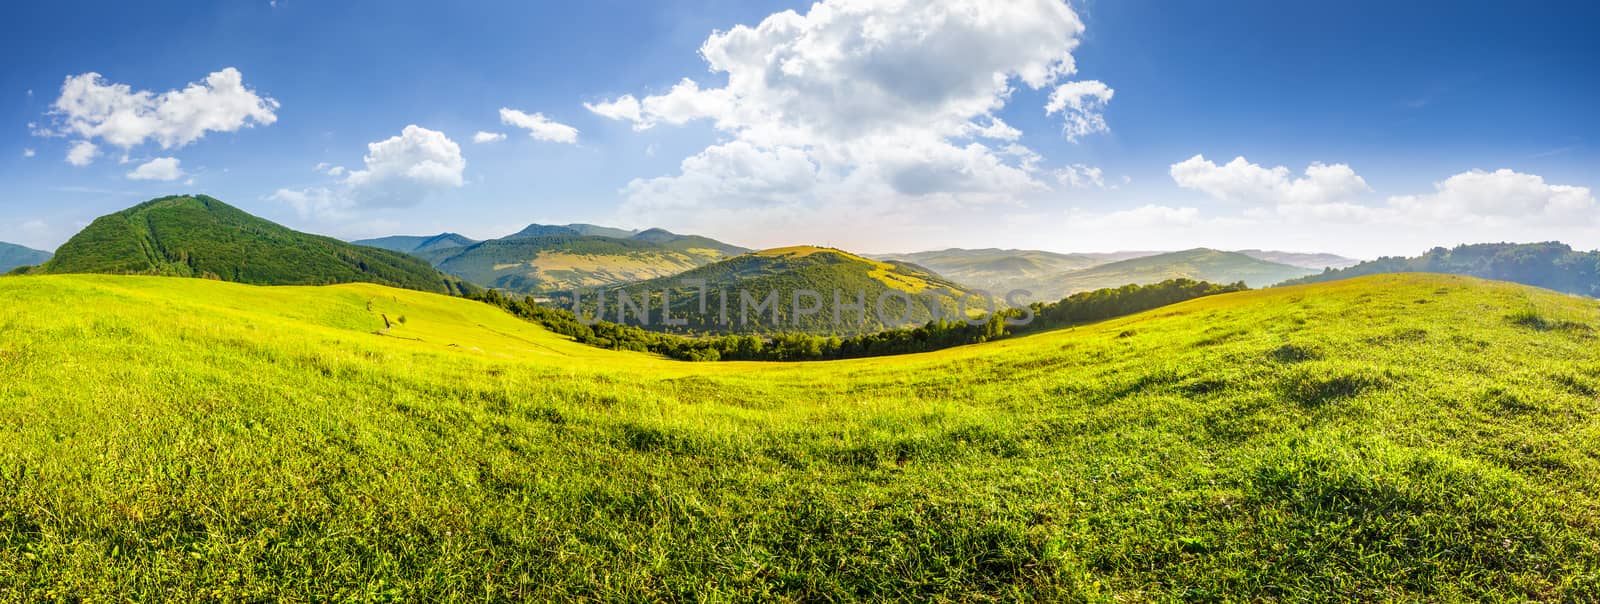 hillside meadow in high mountains by Pellinni